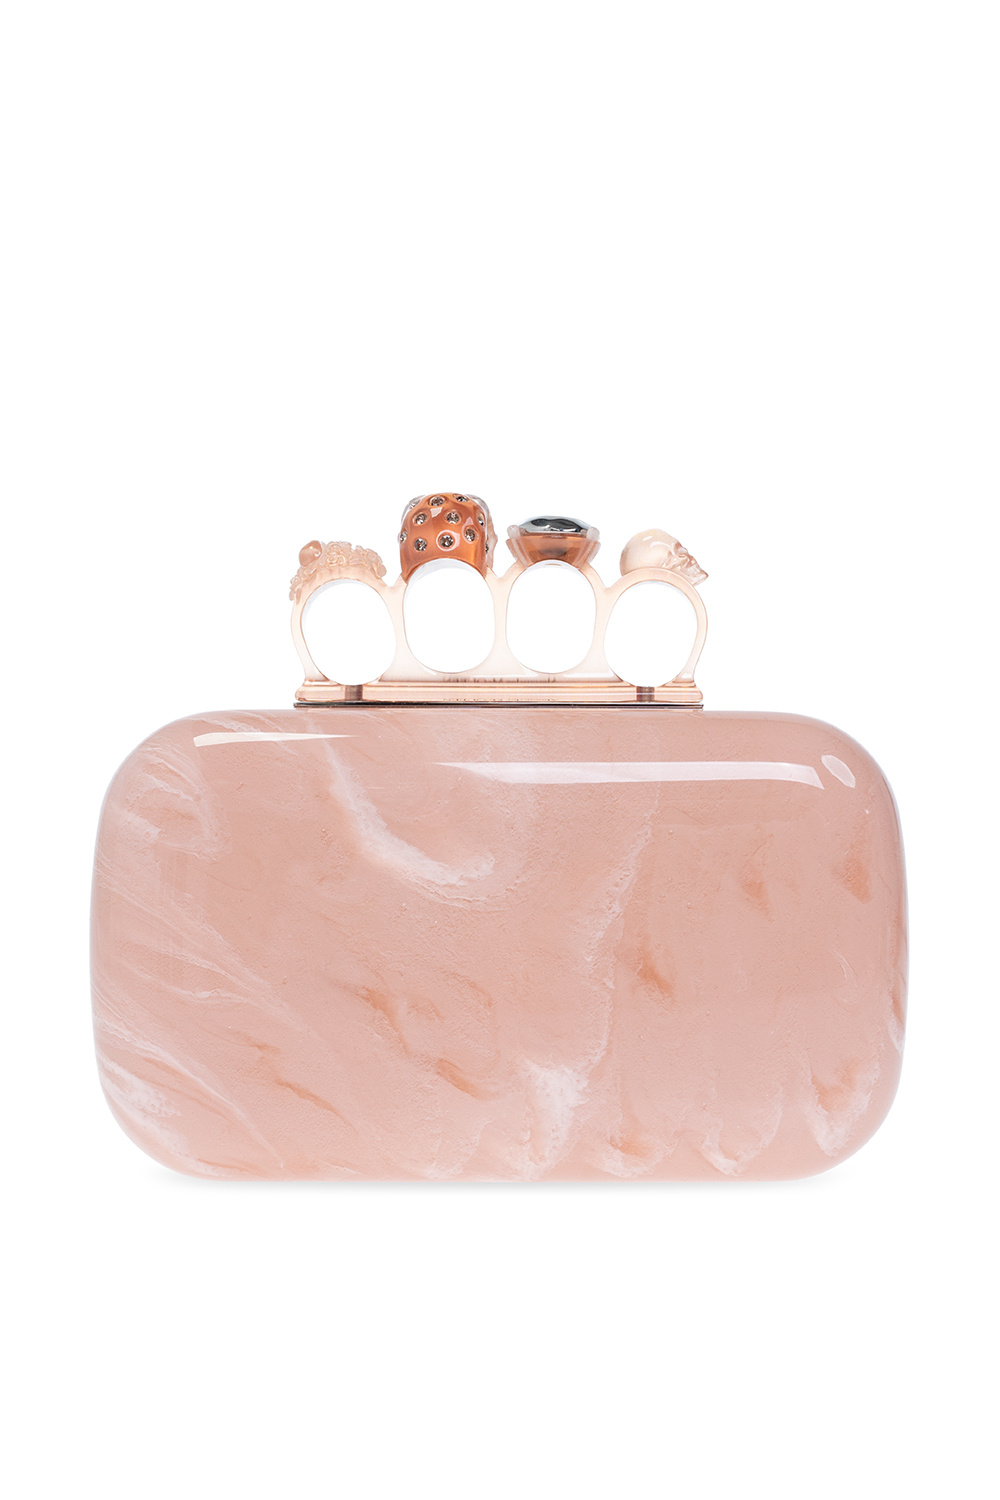 Alexander McQueen ‘Four-Ring’ handbag